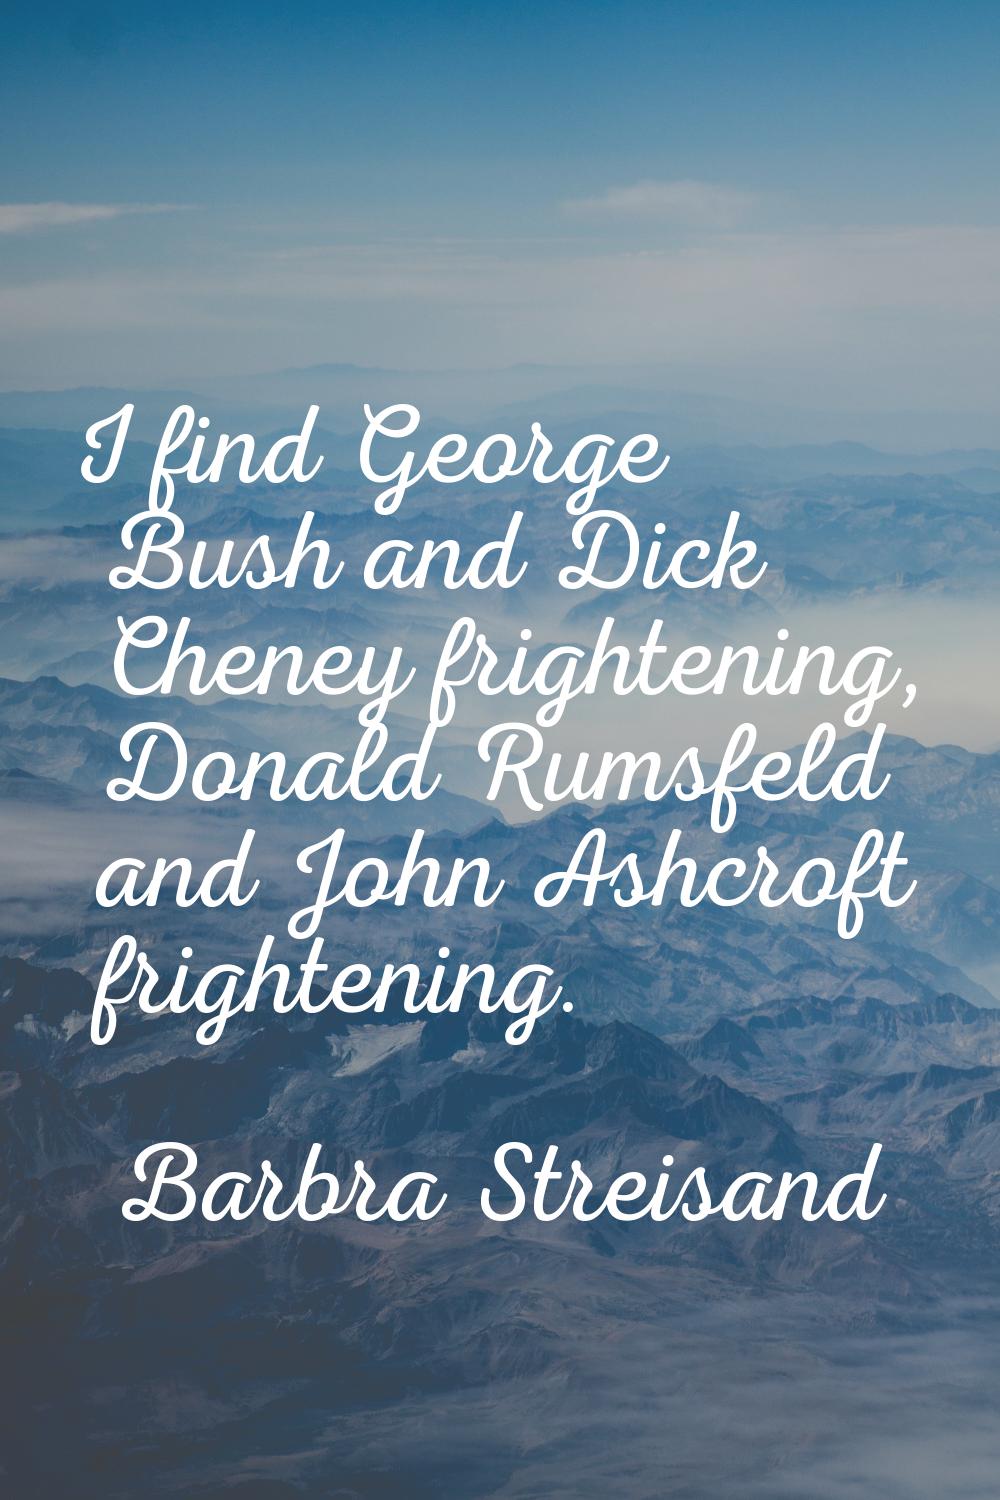 I find George Bush and Dick Cheney frightening, Donald Rumsfeld and John Ashcroft frightening.